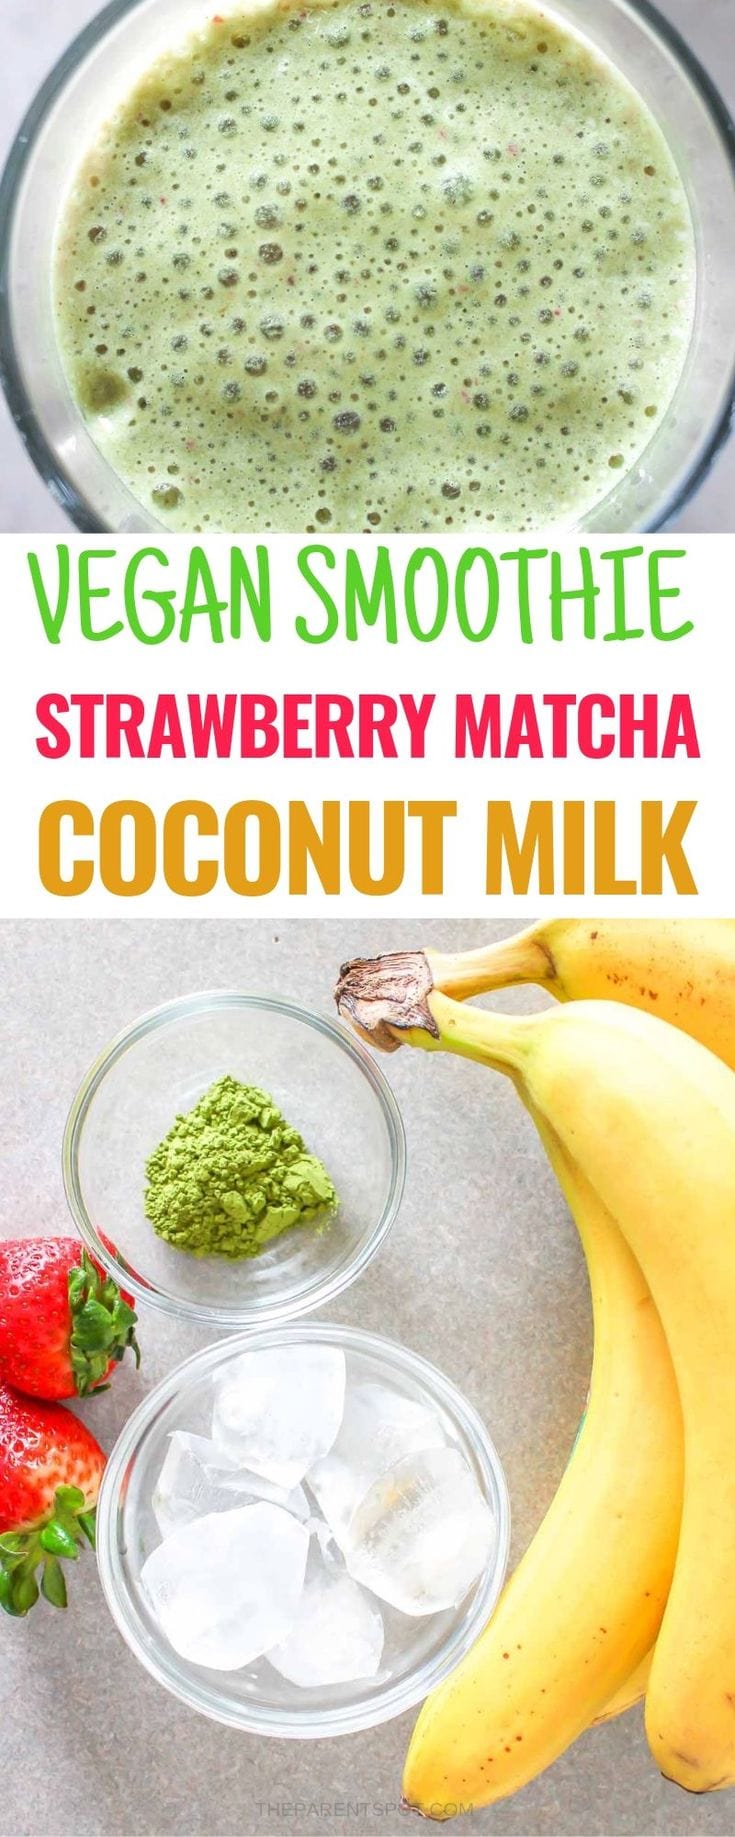 vegan matcha smoothie with strawberry banana and coconut milk